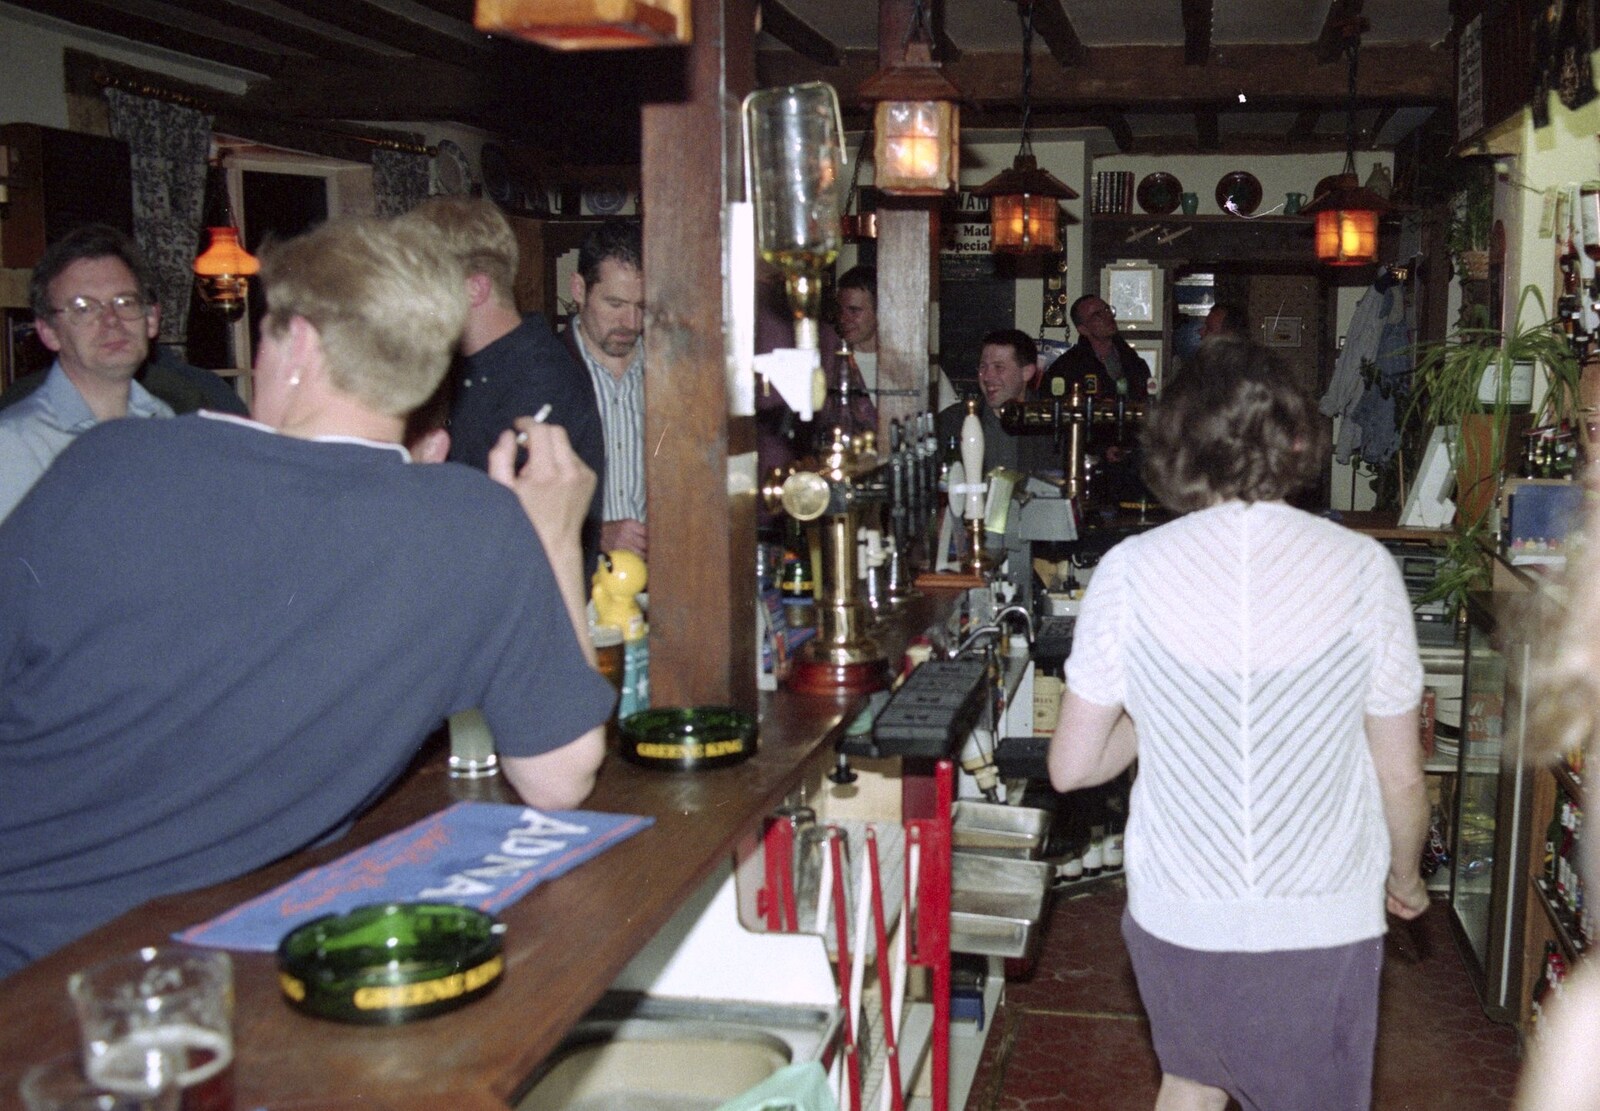 Sylvia behind the bar from Wavy's Thirtieth Birthday, The Swan Inn, Brome, Suffolk - 24th May 2000